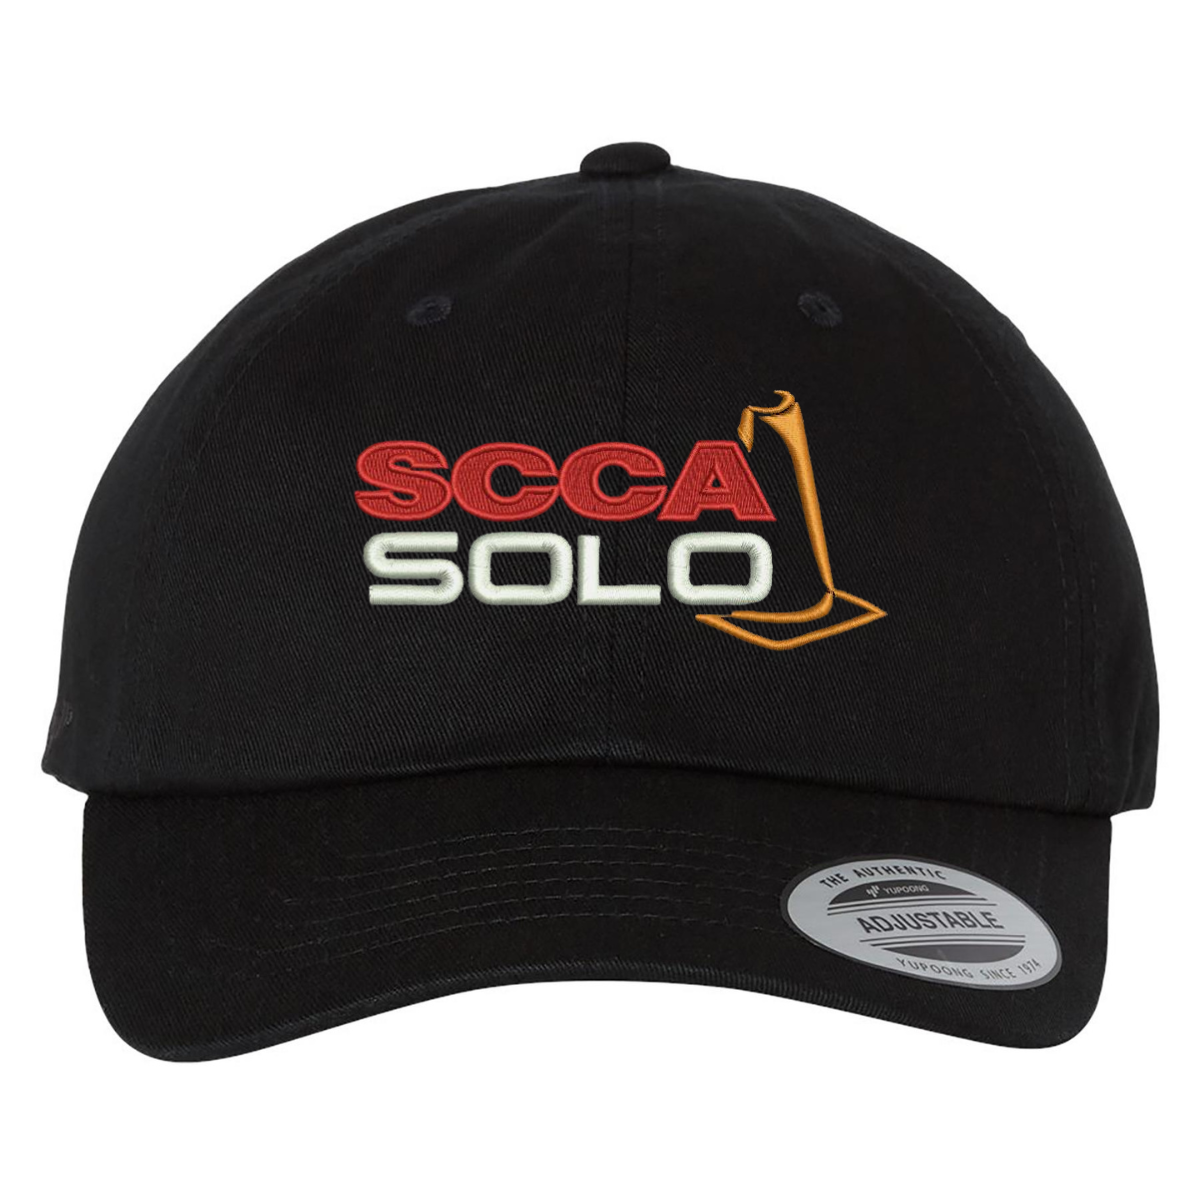 SCCA SOLO Low Profile Dad's Cap